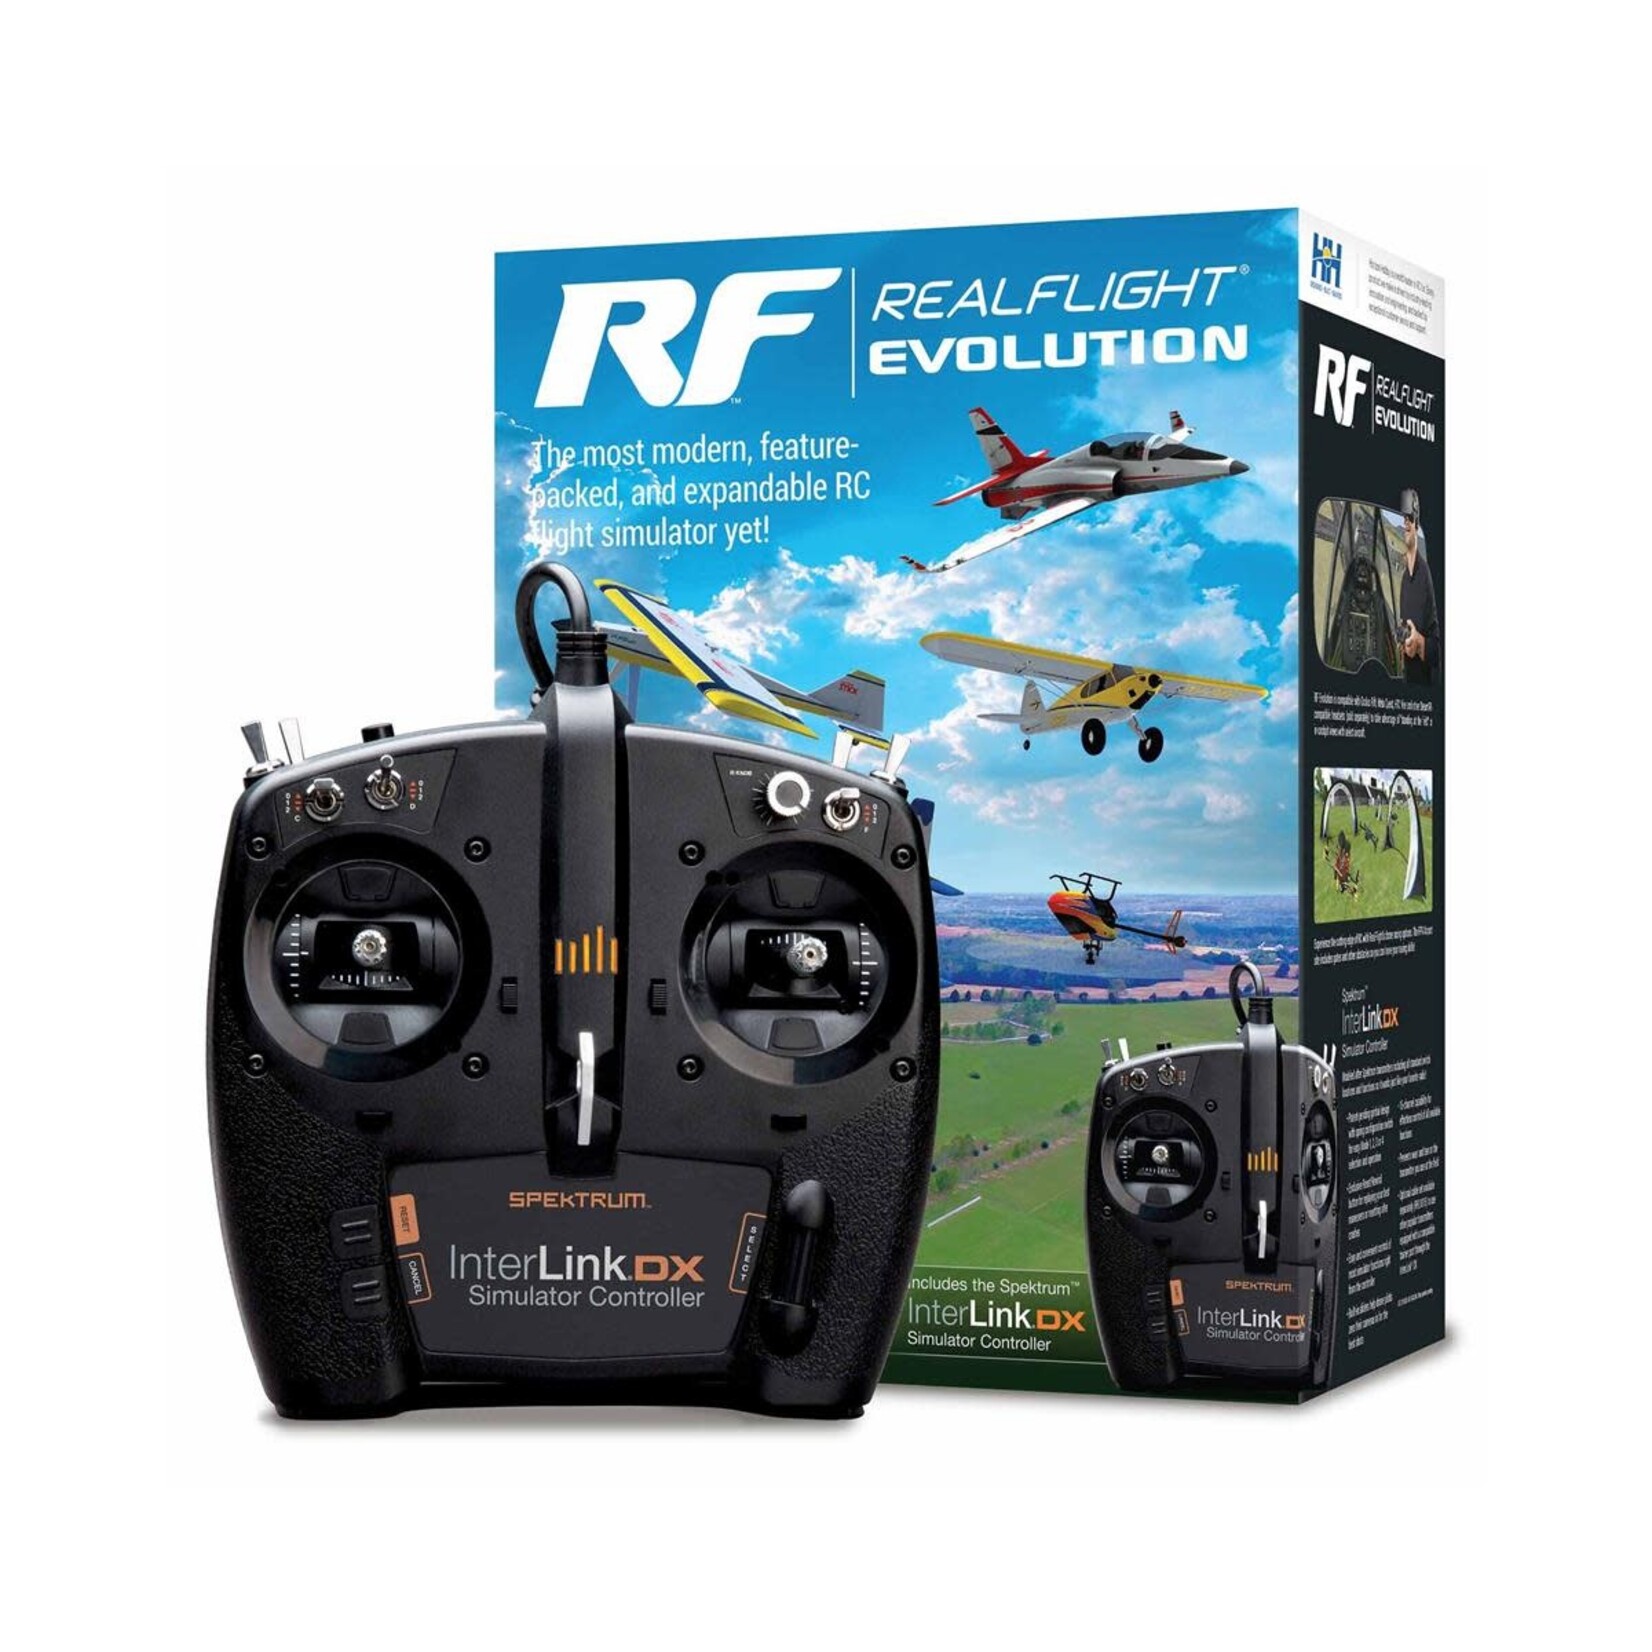 RealFlight RealFlight Evolution RC Flight Simulator w/InterLink DX Controller #RFL2000